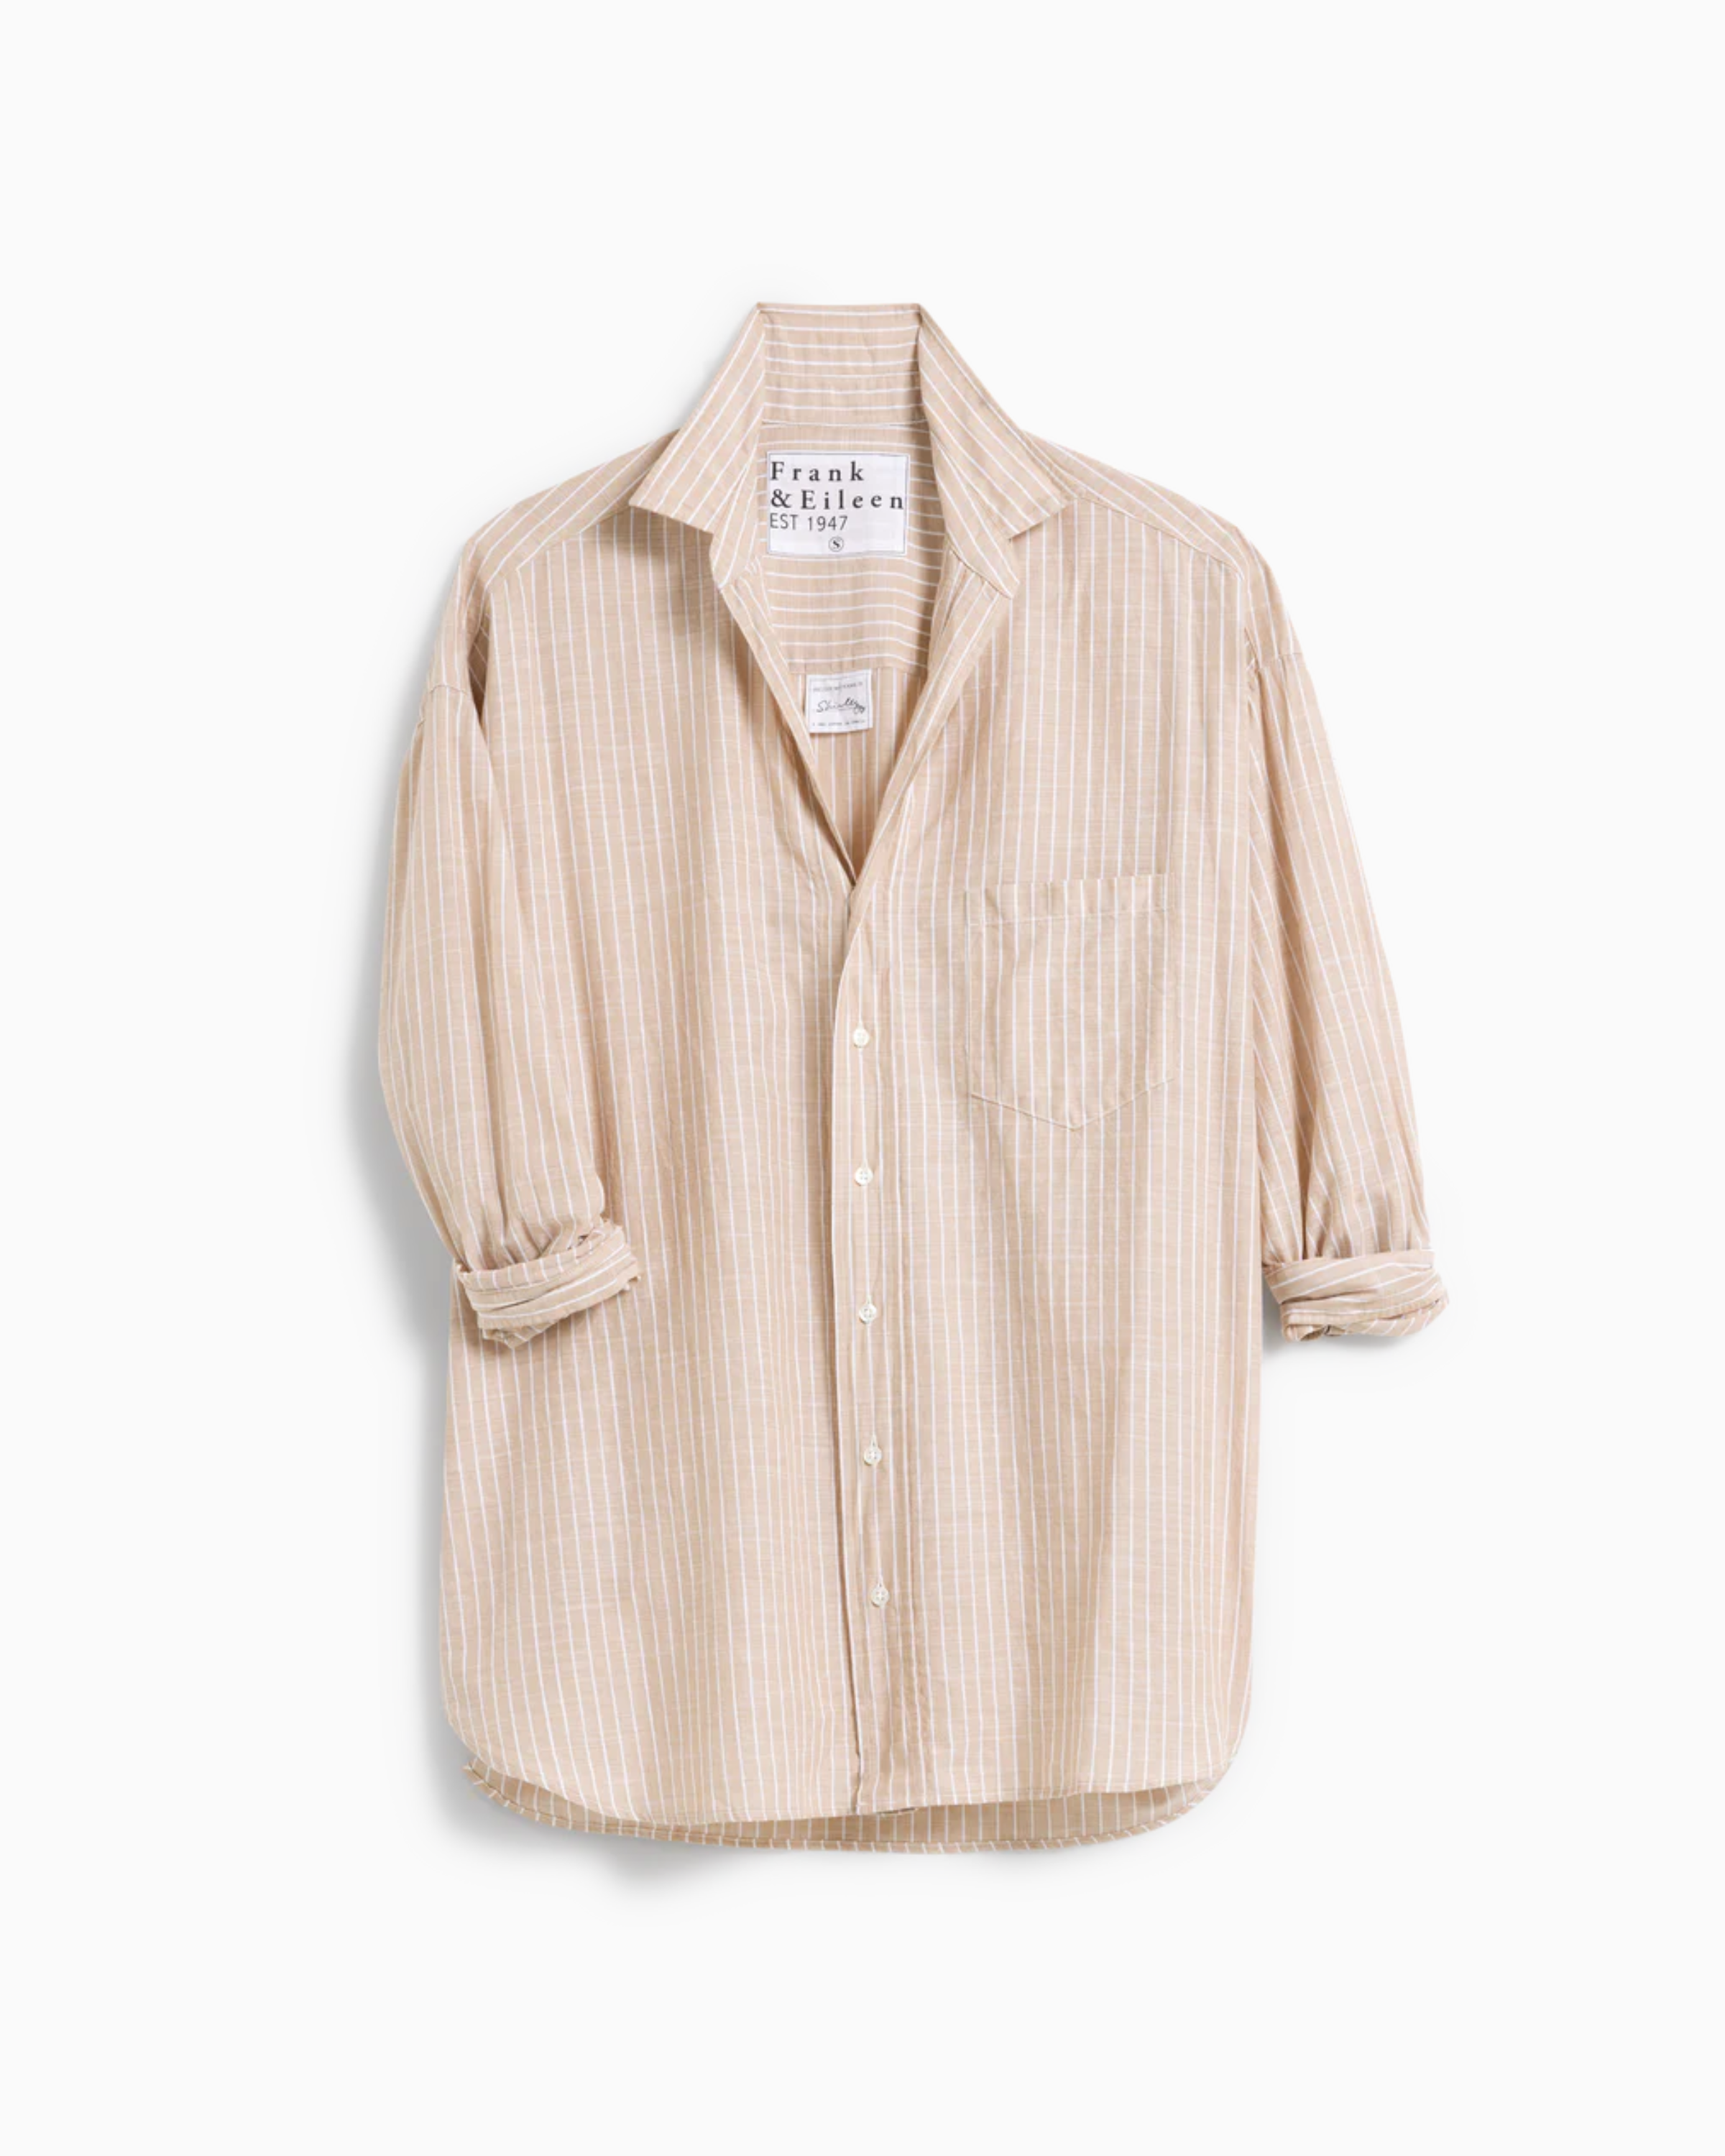 Frank & Eileen Shirley Oversized Button Up Shirt in Sand Stripe